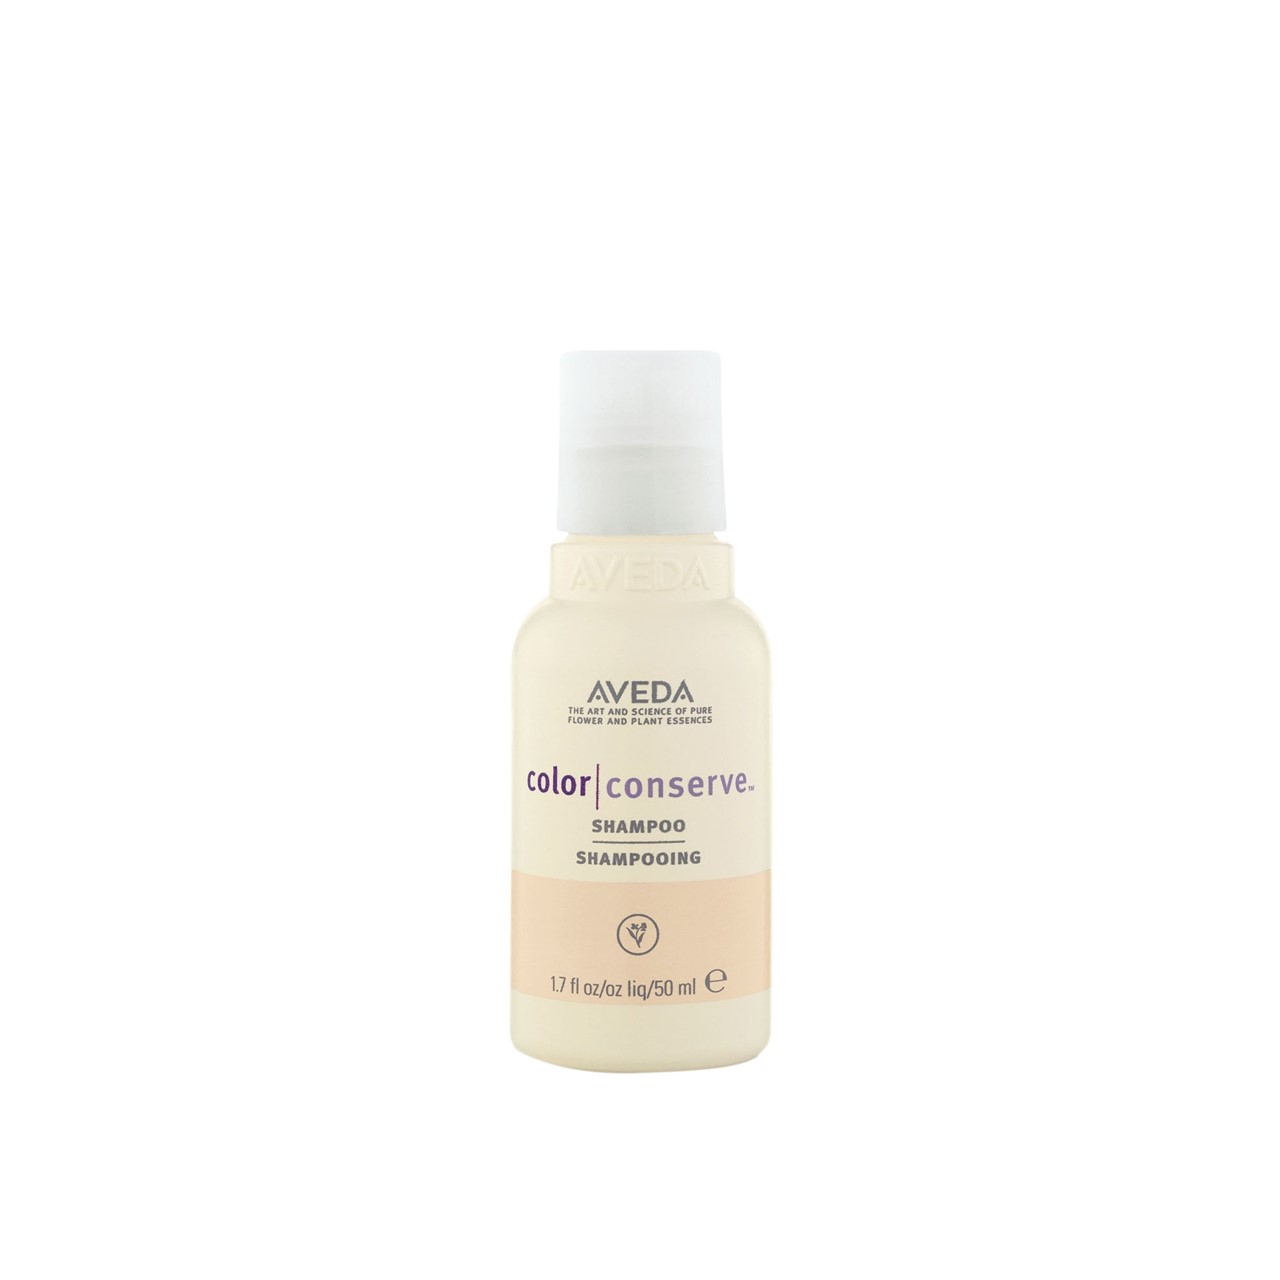 Aveda Color Conserve Shampoo 50ml (1.7 fl oz)